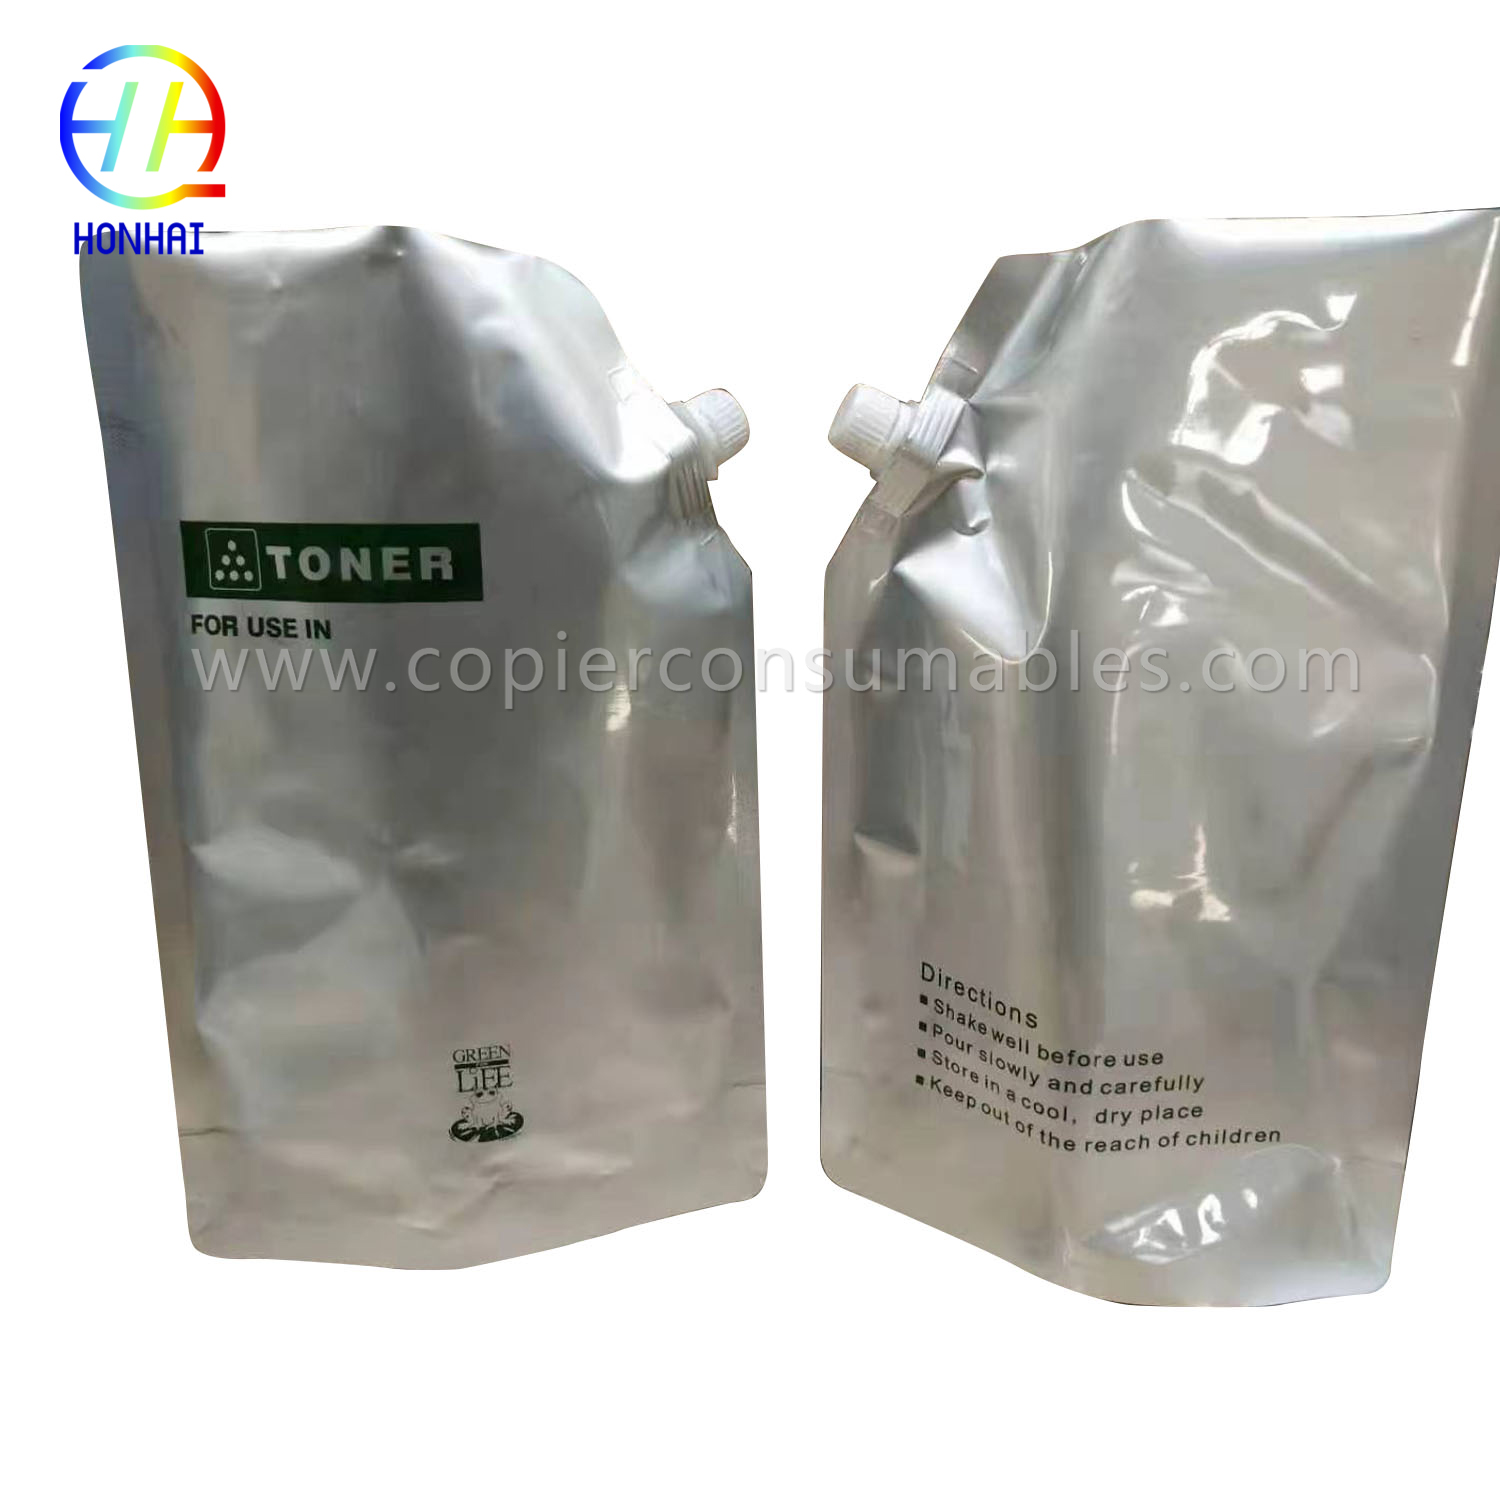 Toner Powder for HP PRO M402 426 CF226